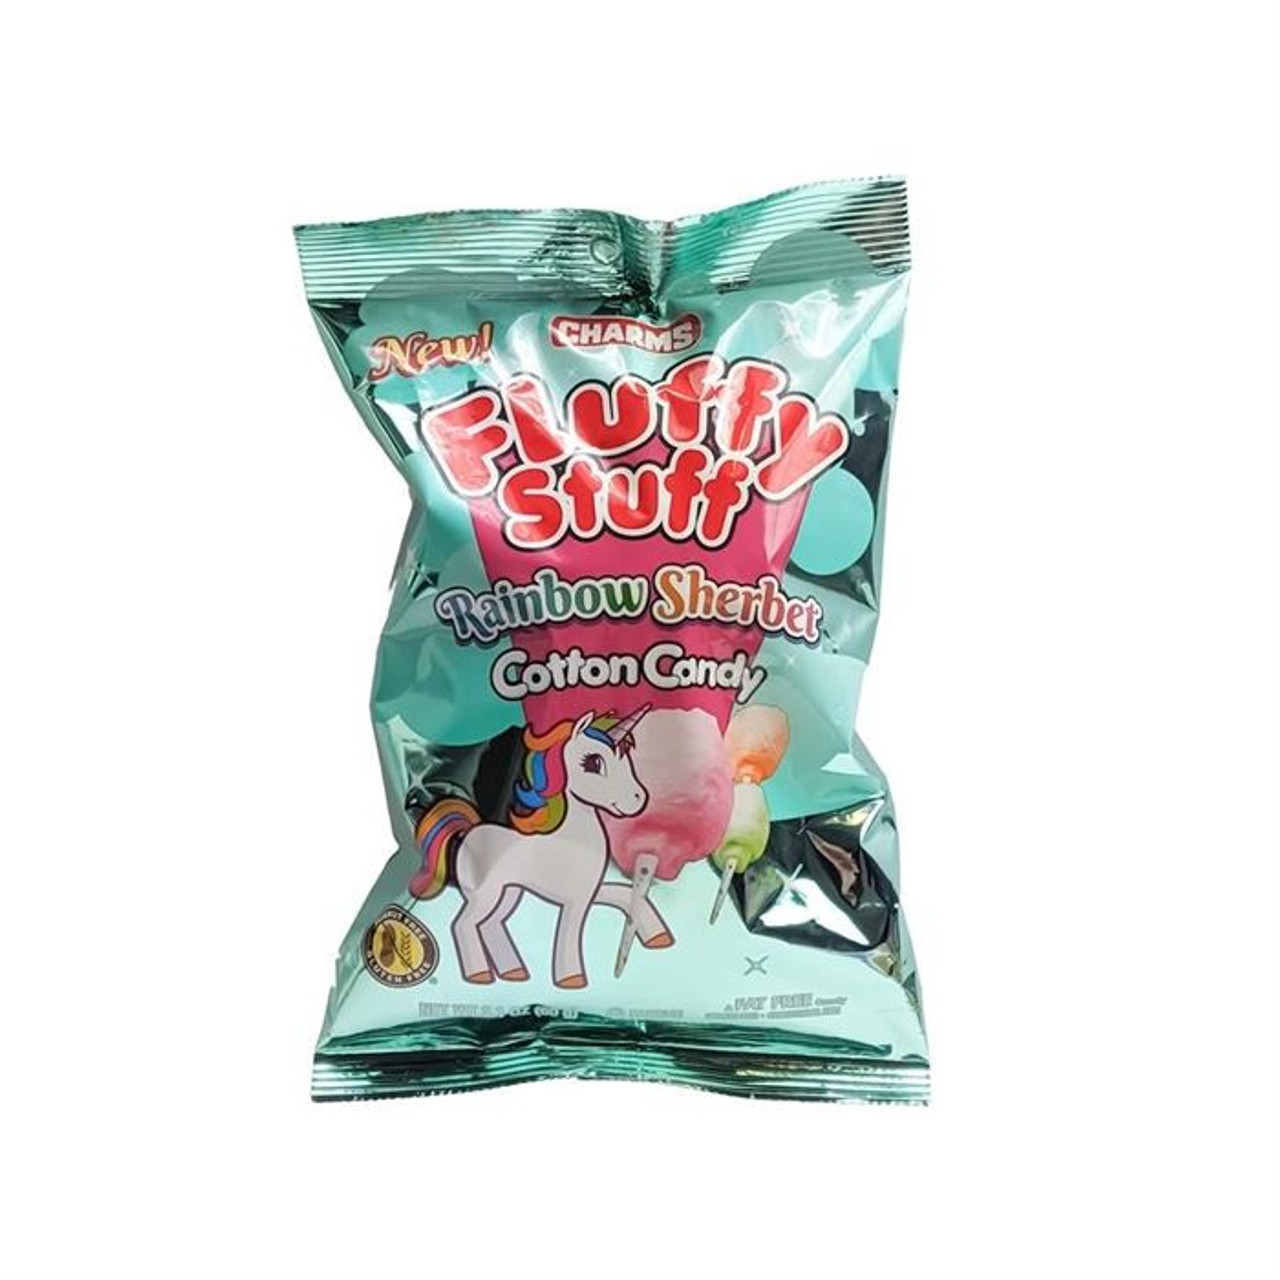 Fluffy Stuff Rainbow Sherbet Cotton Candy - 2.1 oz Bag